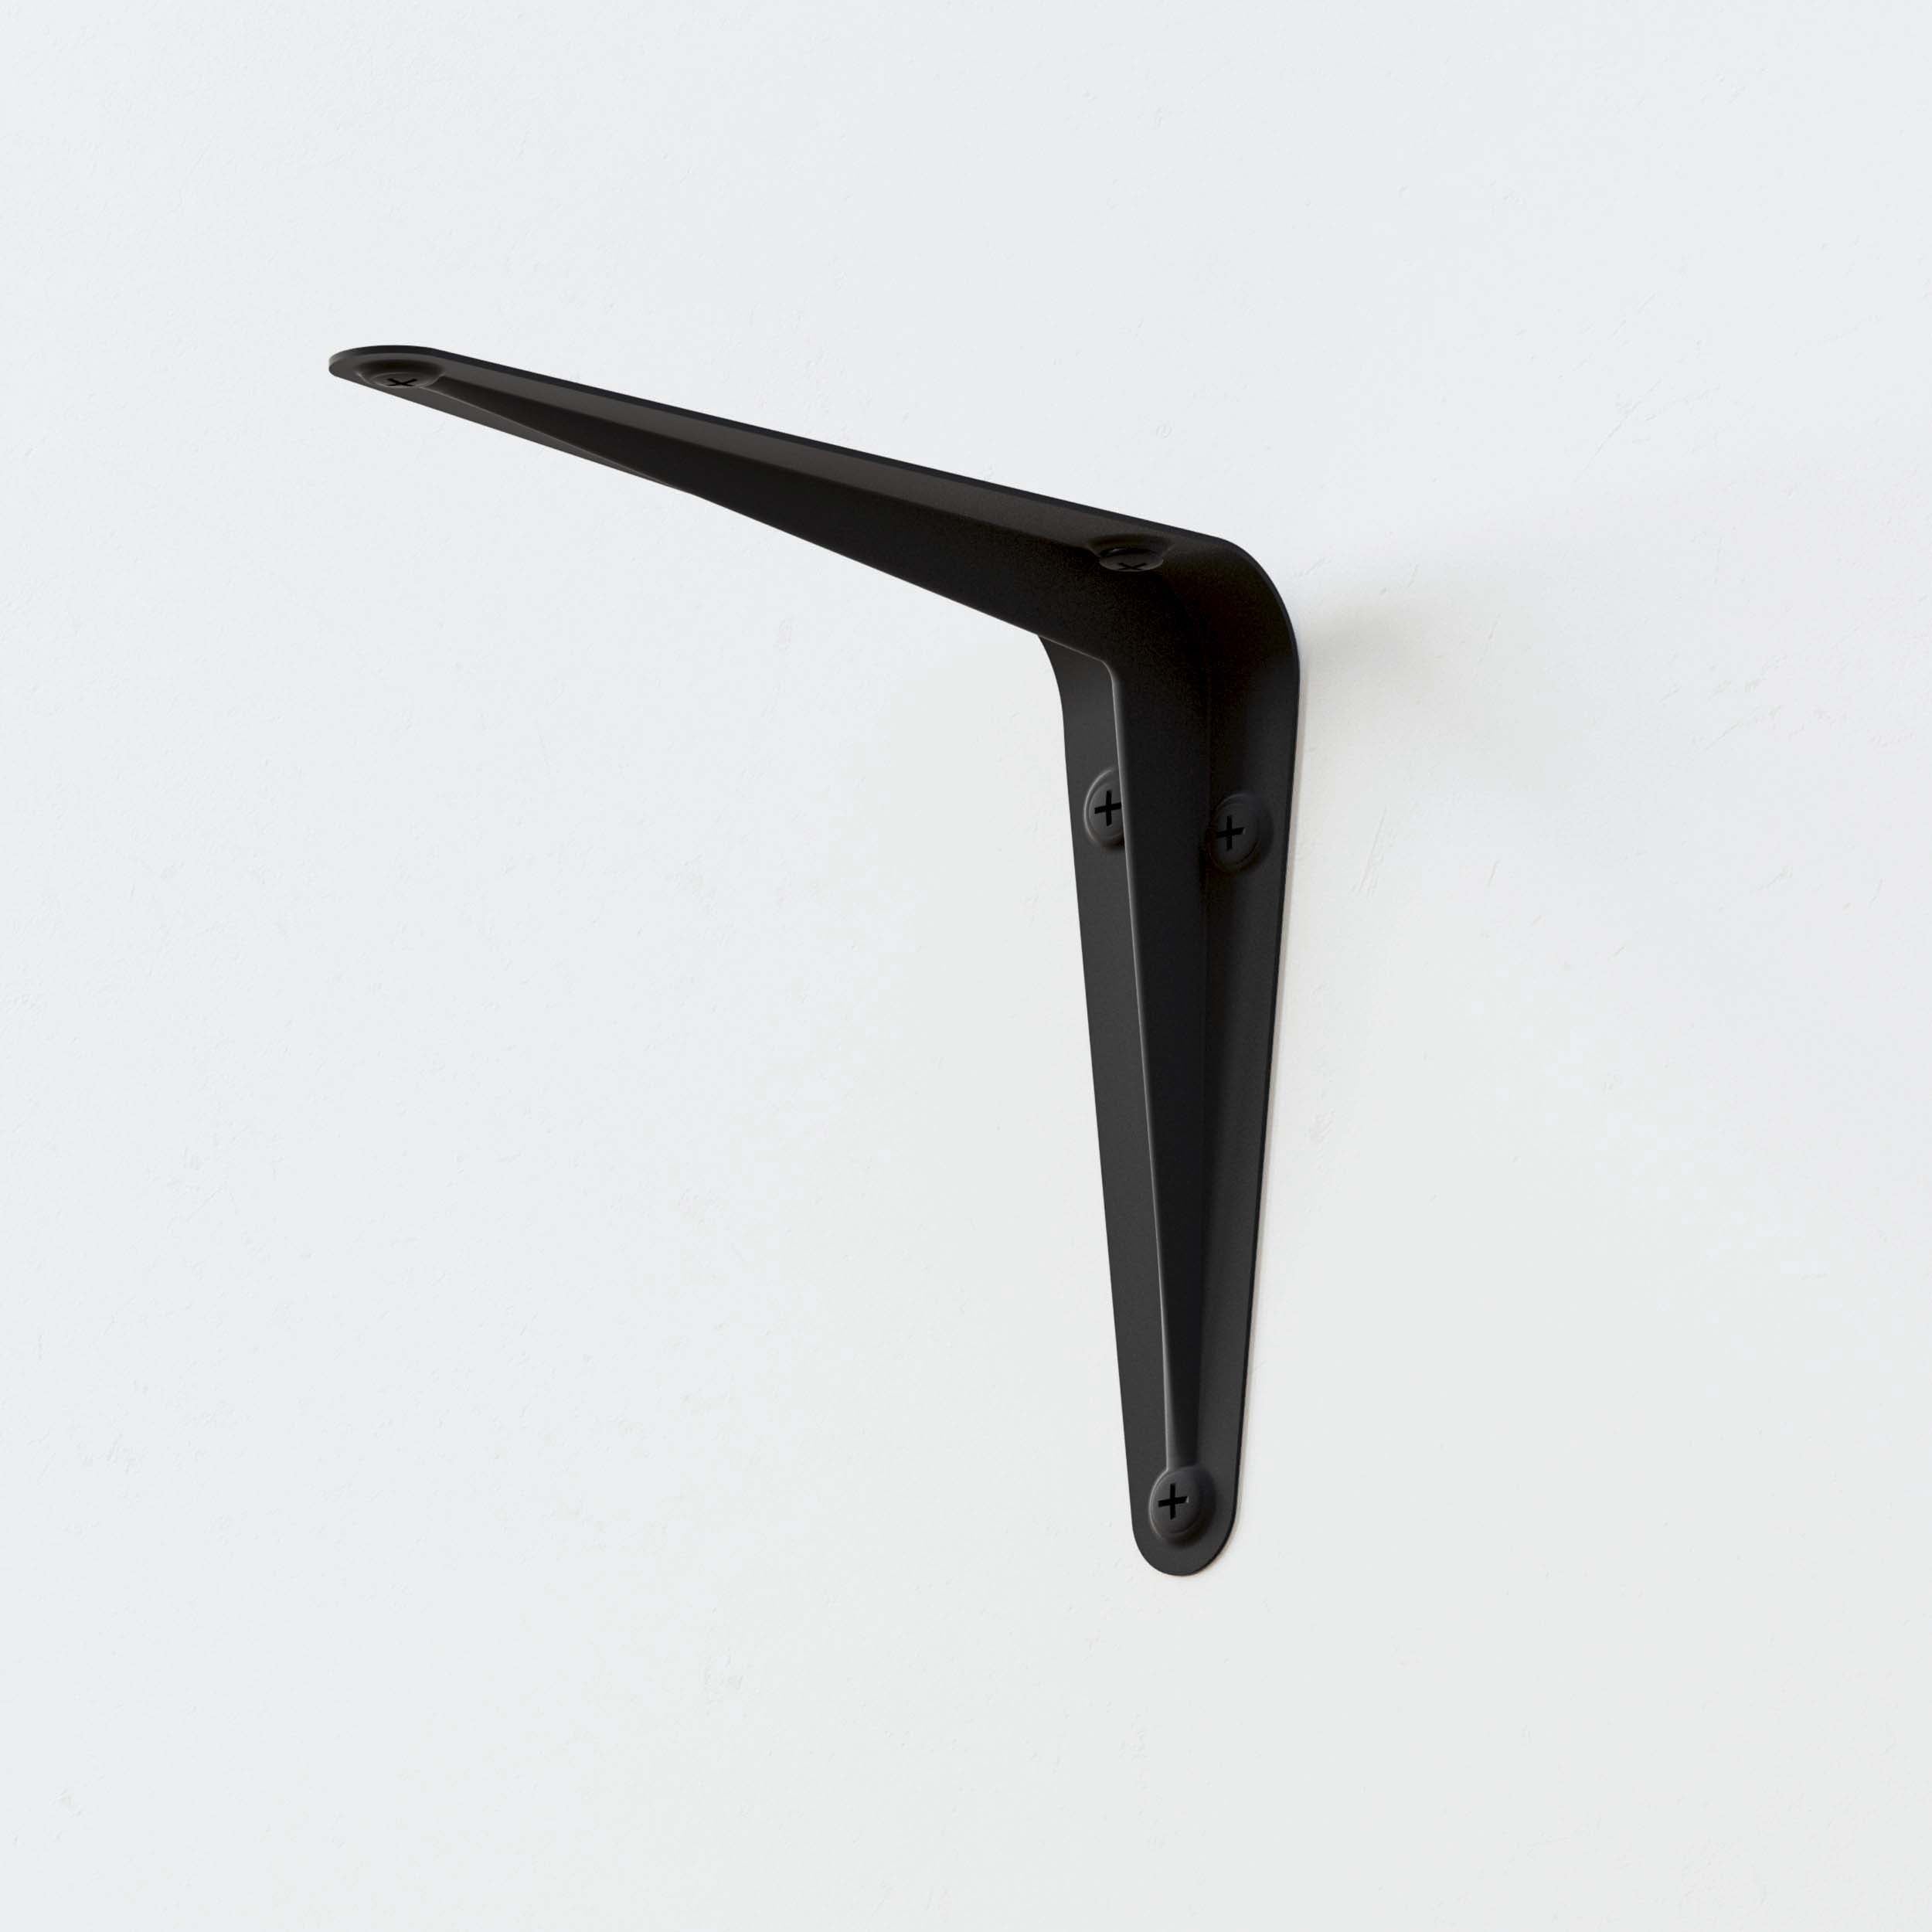 Durable black metal shelf bracket for creating custom wall-mounted storage solutions.